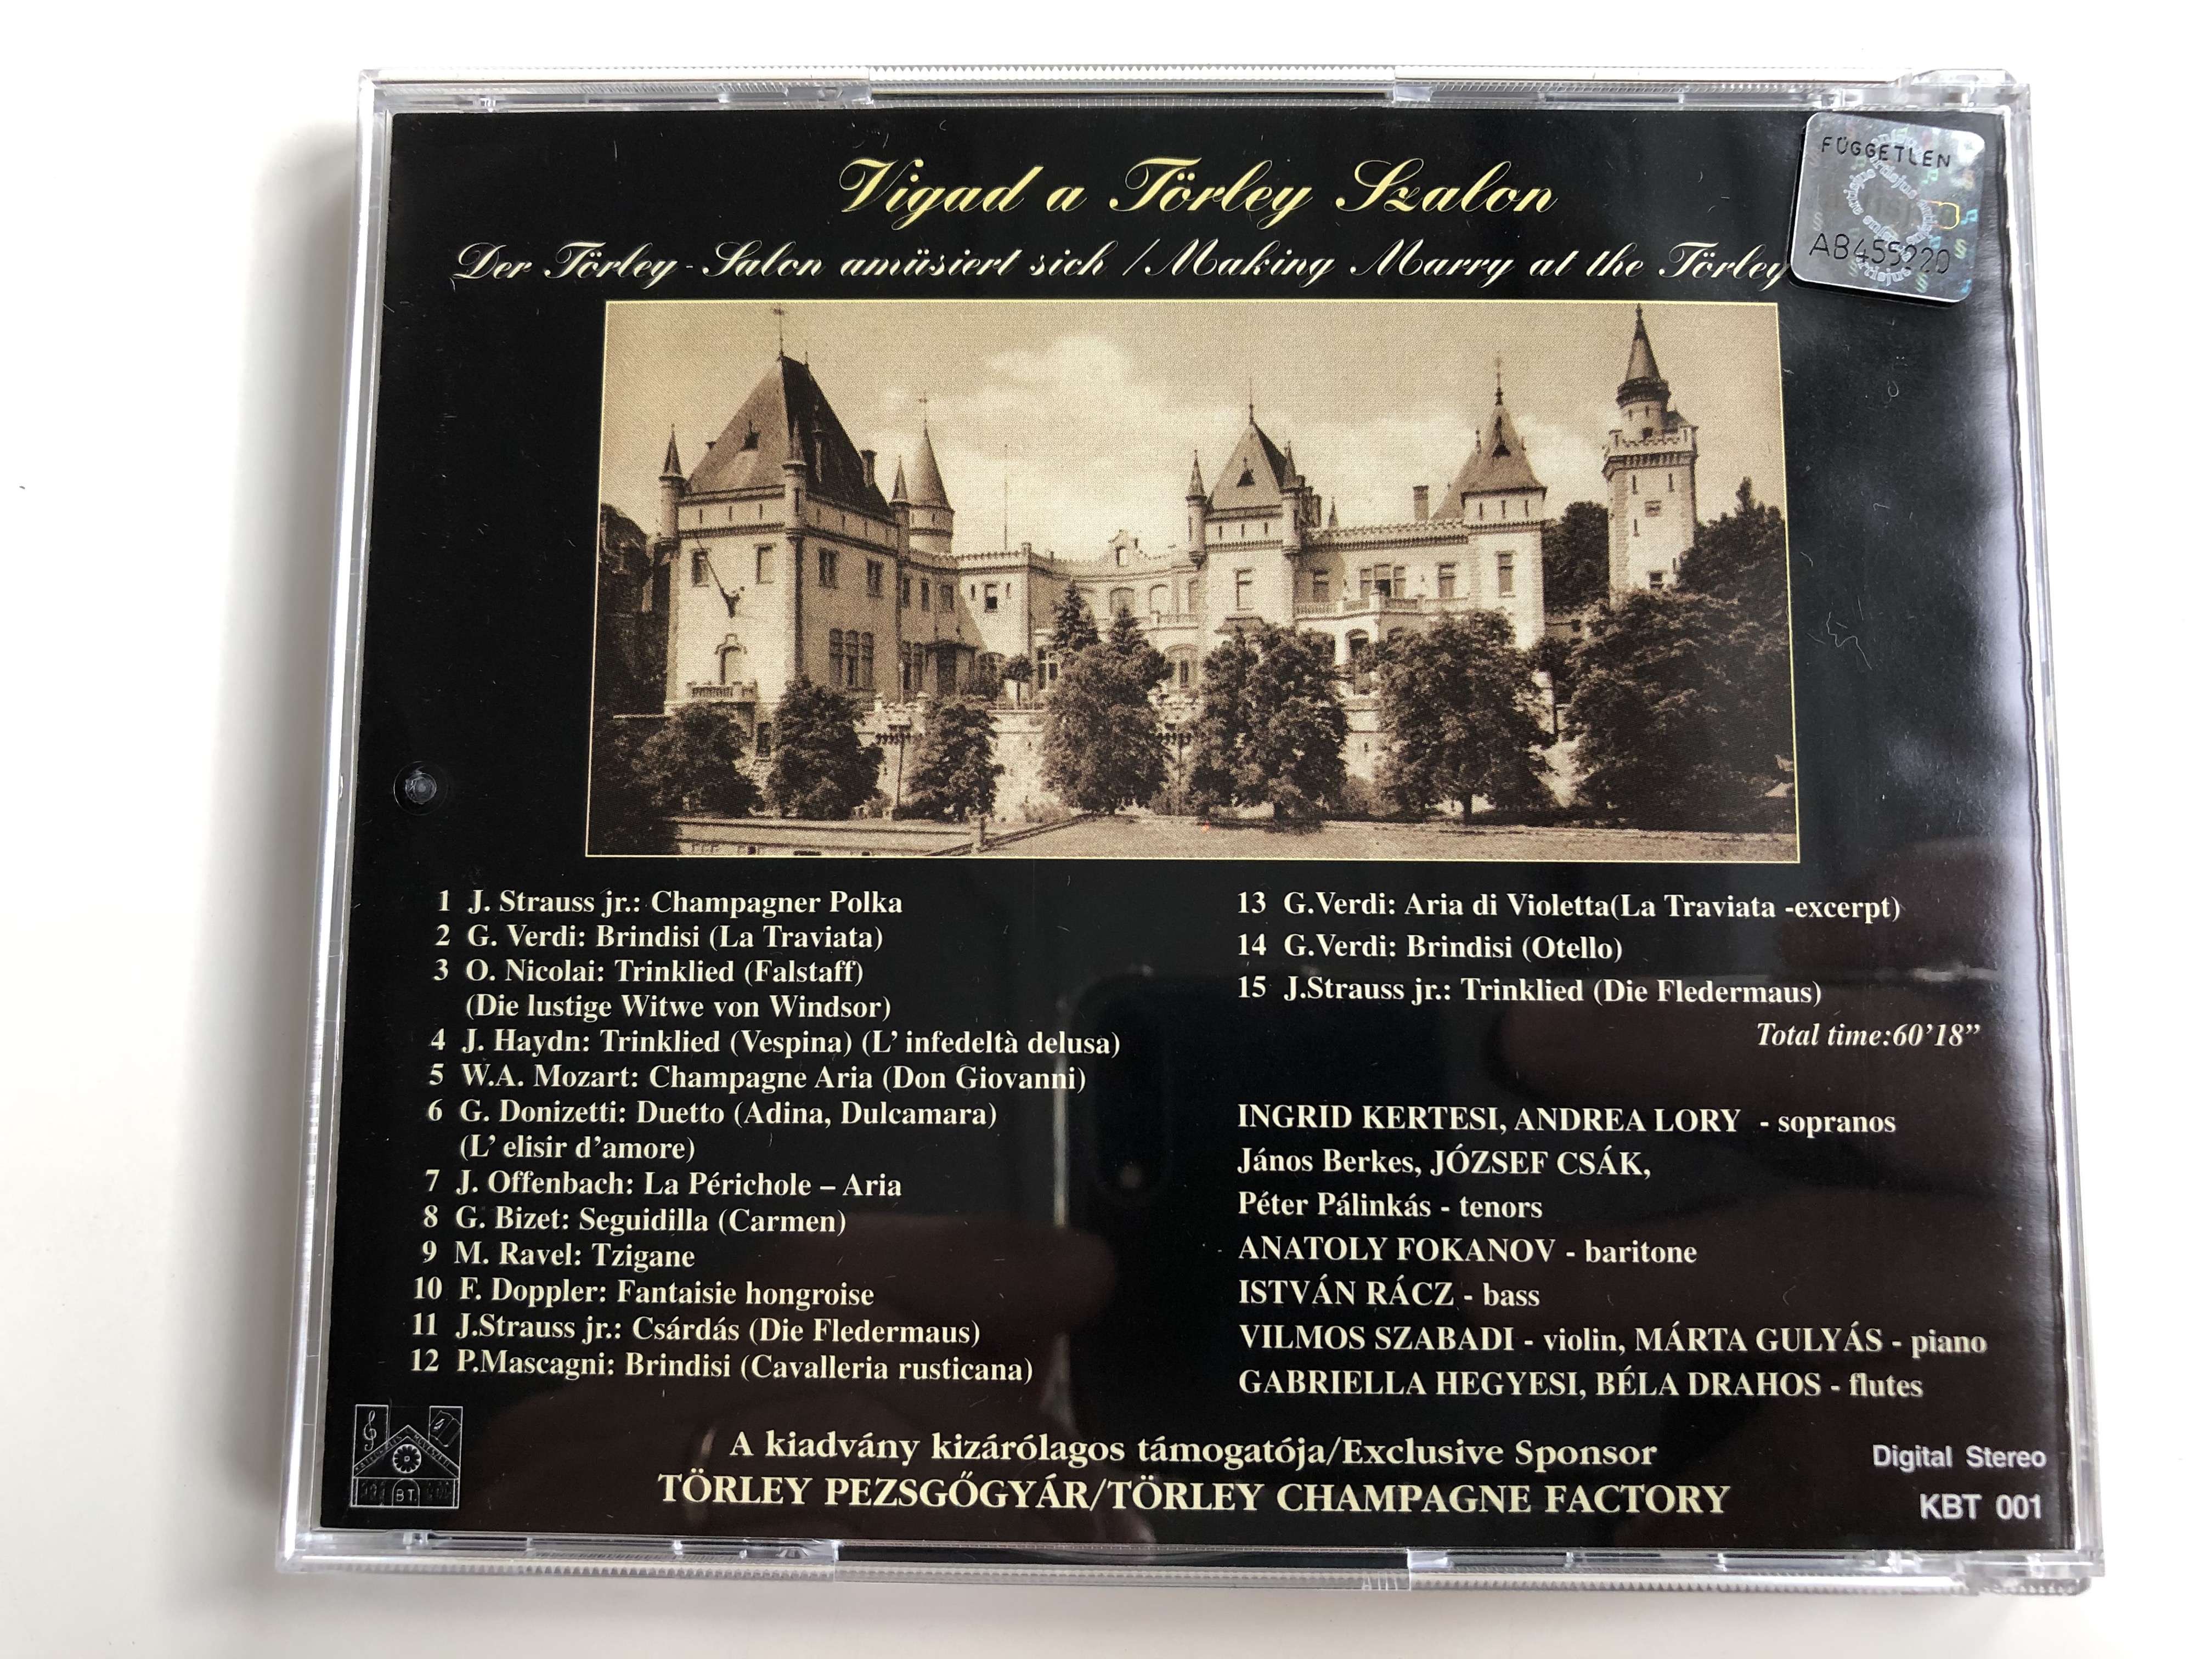 vigad-a-torley-szalon-making-marry-at-the-der-torley-szalon-amusiert-sich-katedralis-muveszeti-bt.-audio-cd-1998-stereo-kbt-001-16-.jpg